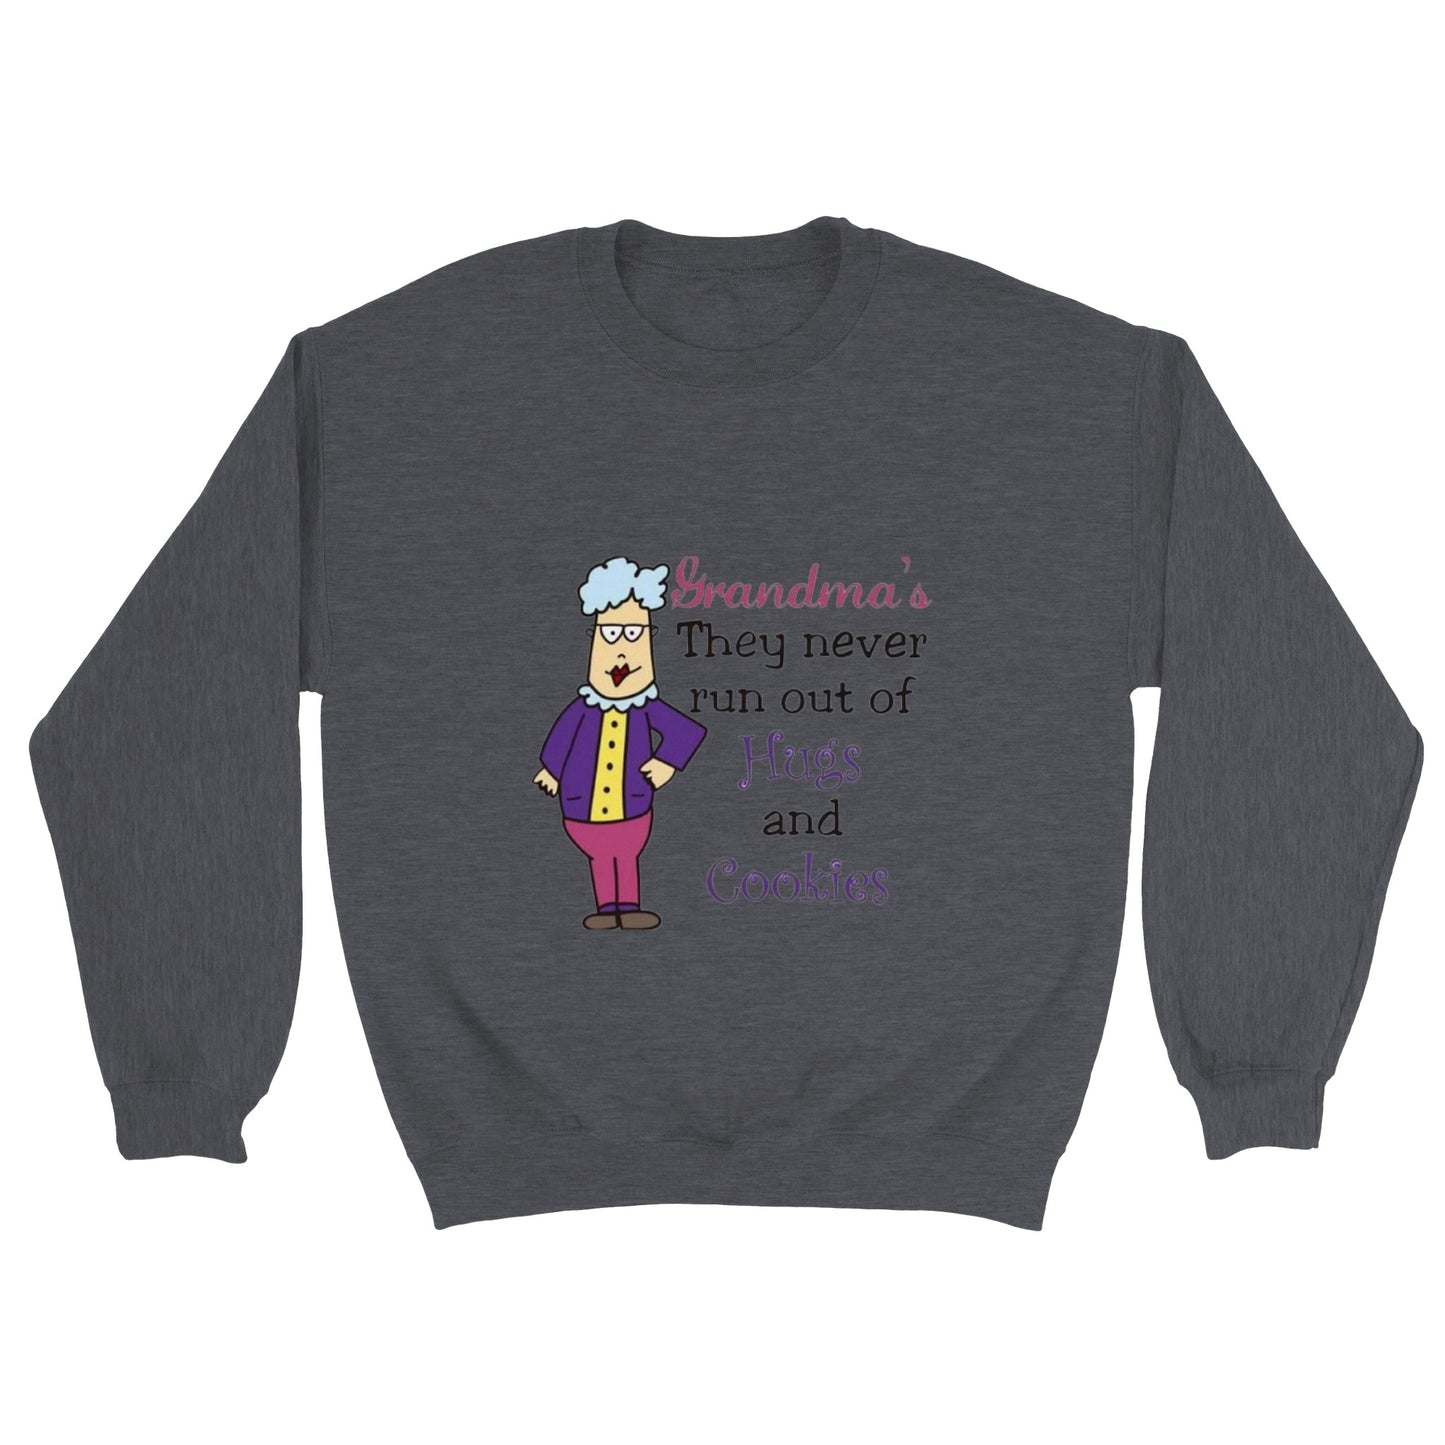 Grandma's Never Run Out of Hugs Classic Unisex Crewneck Sweatshirt